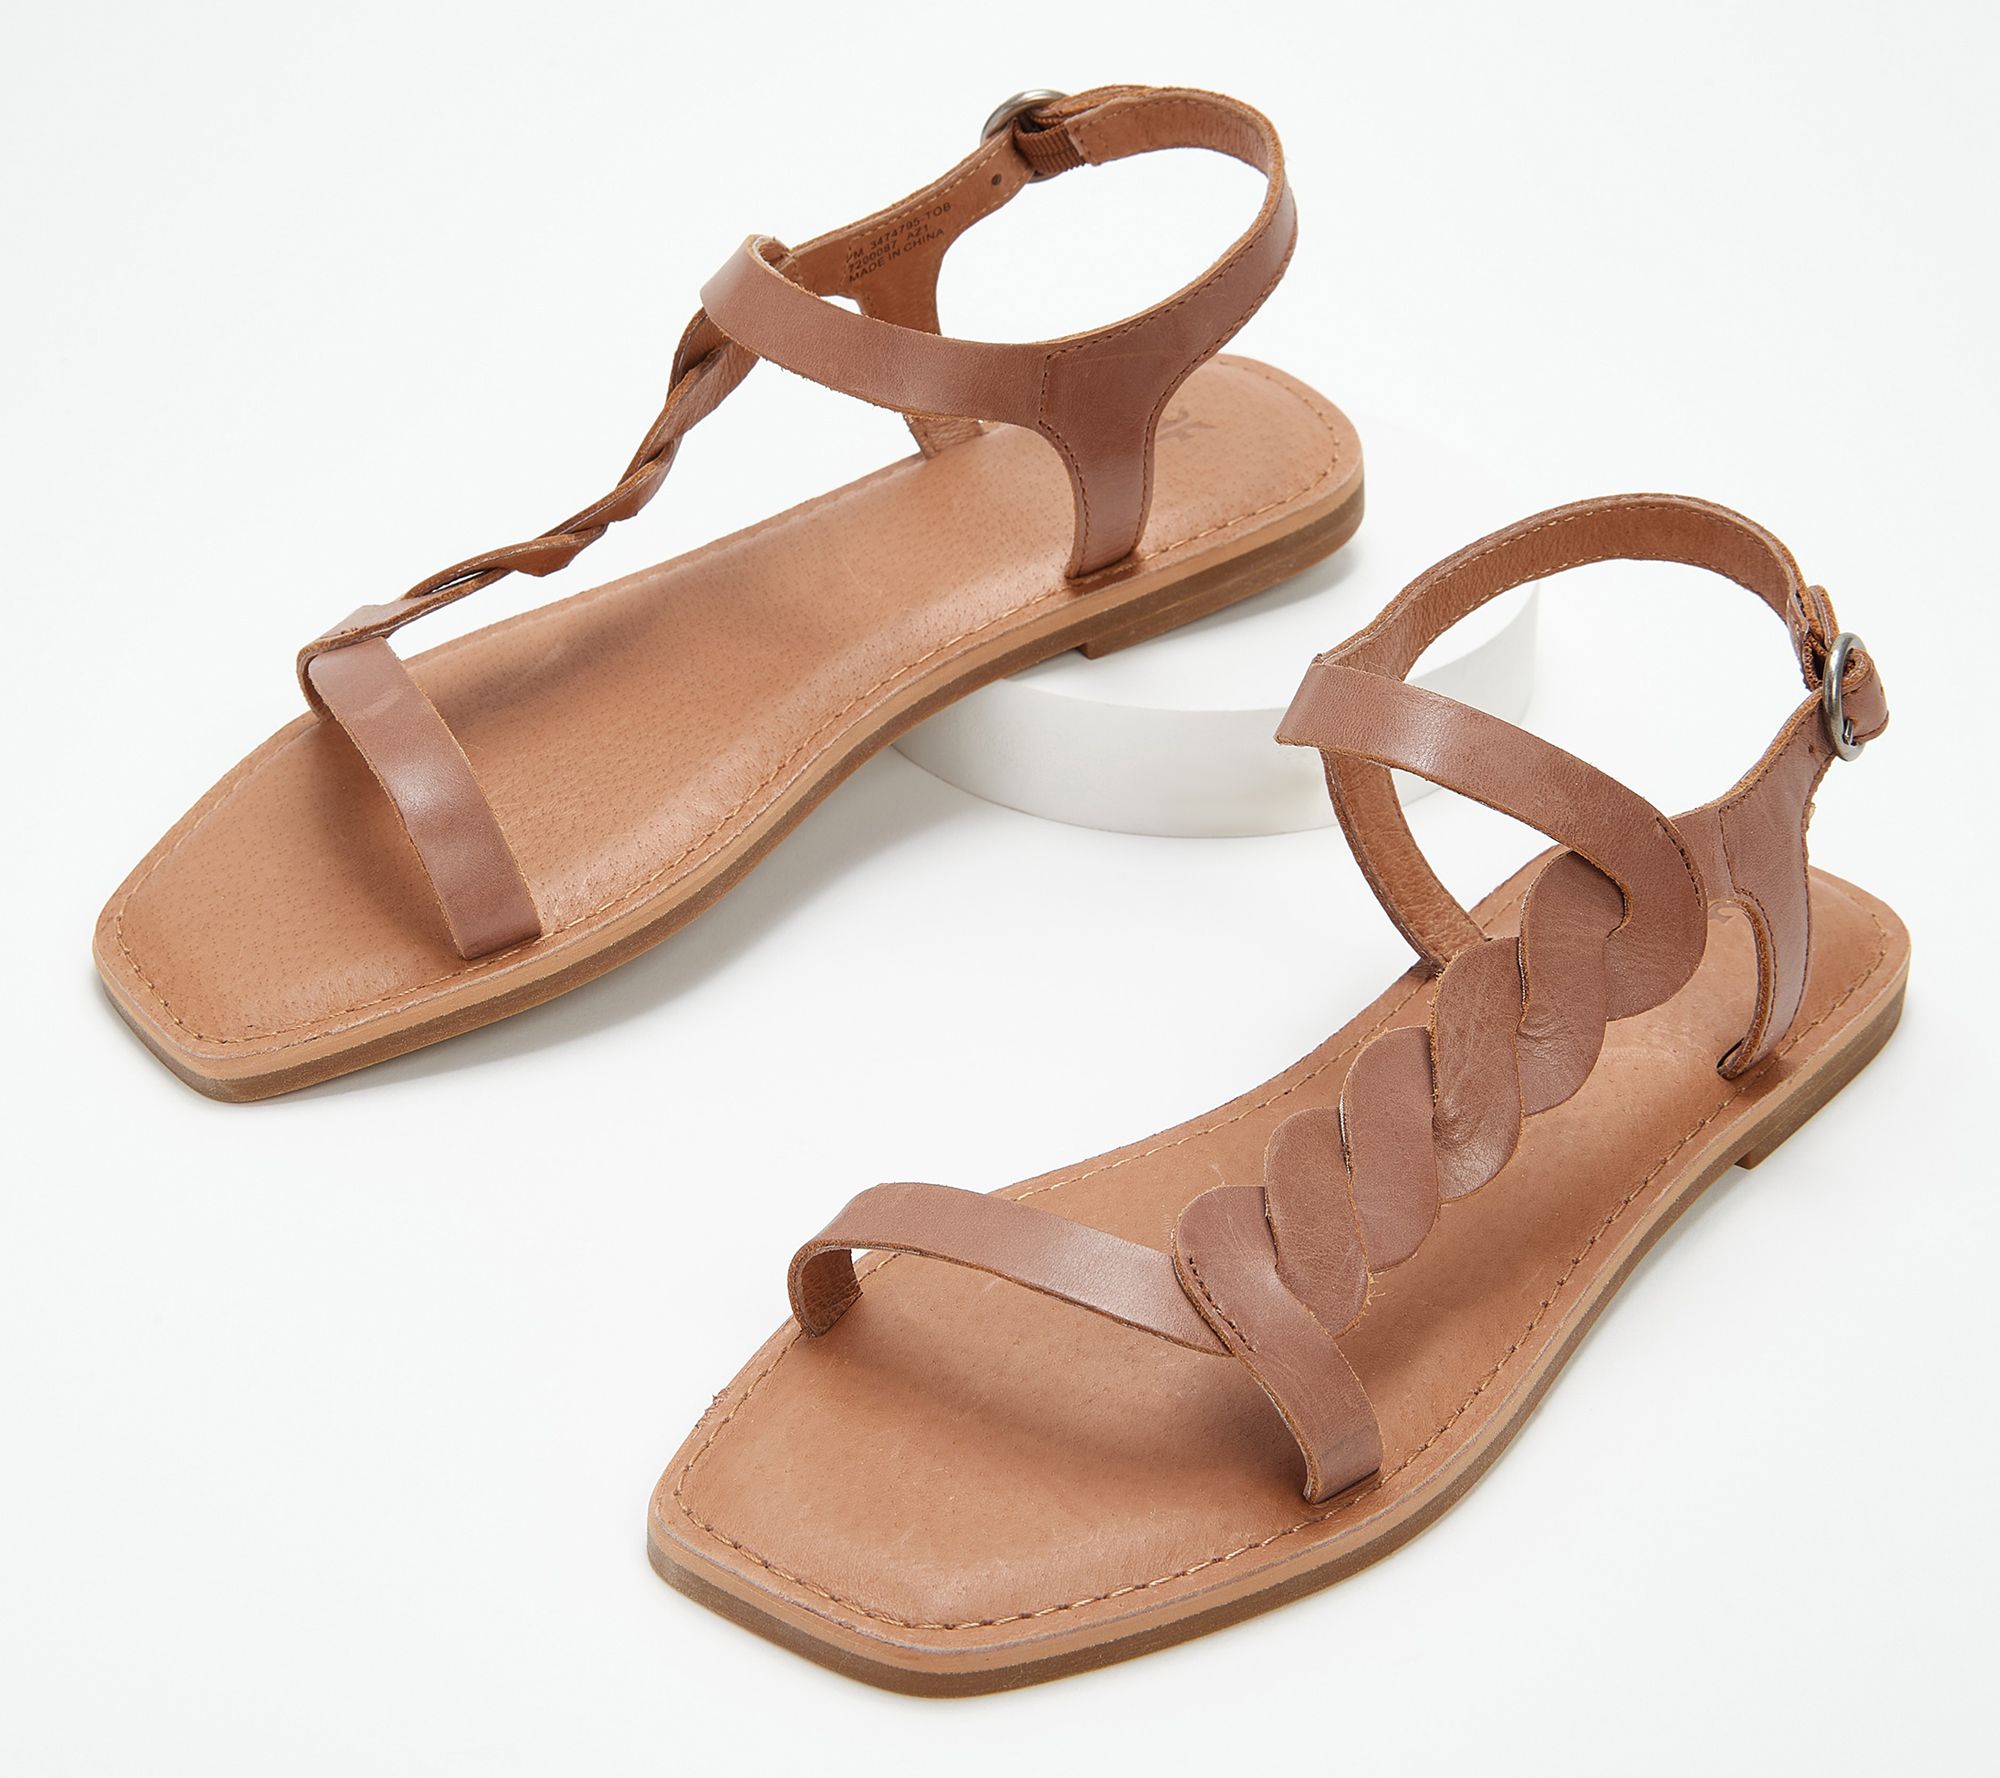 Frye Leather Braided Sandals - Sydney - QVC.com